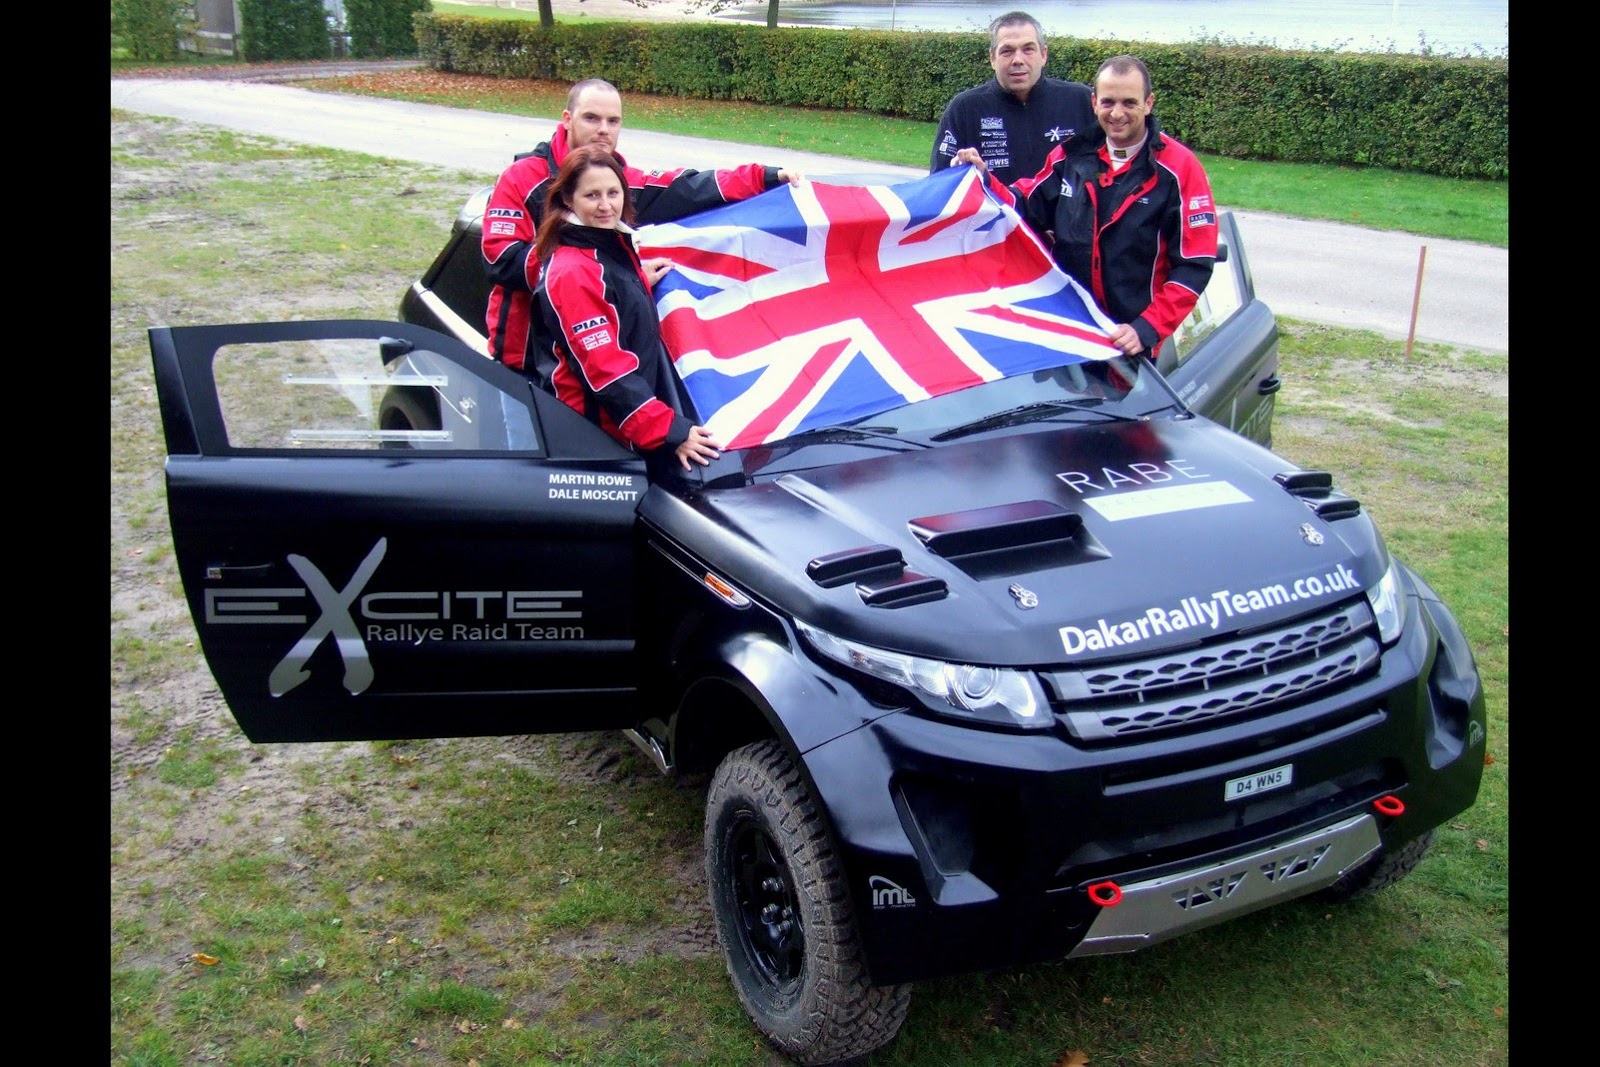 Excite Rallye Raid Team Range Rover Evoque